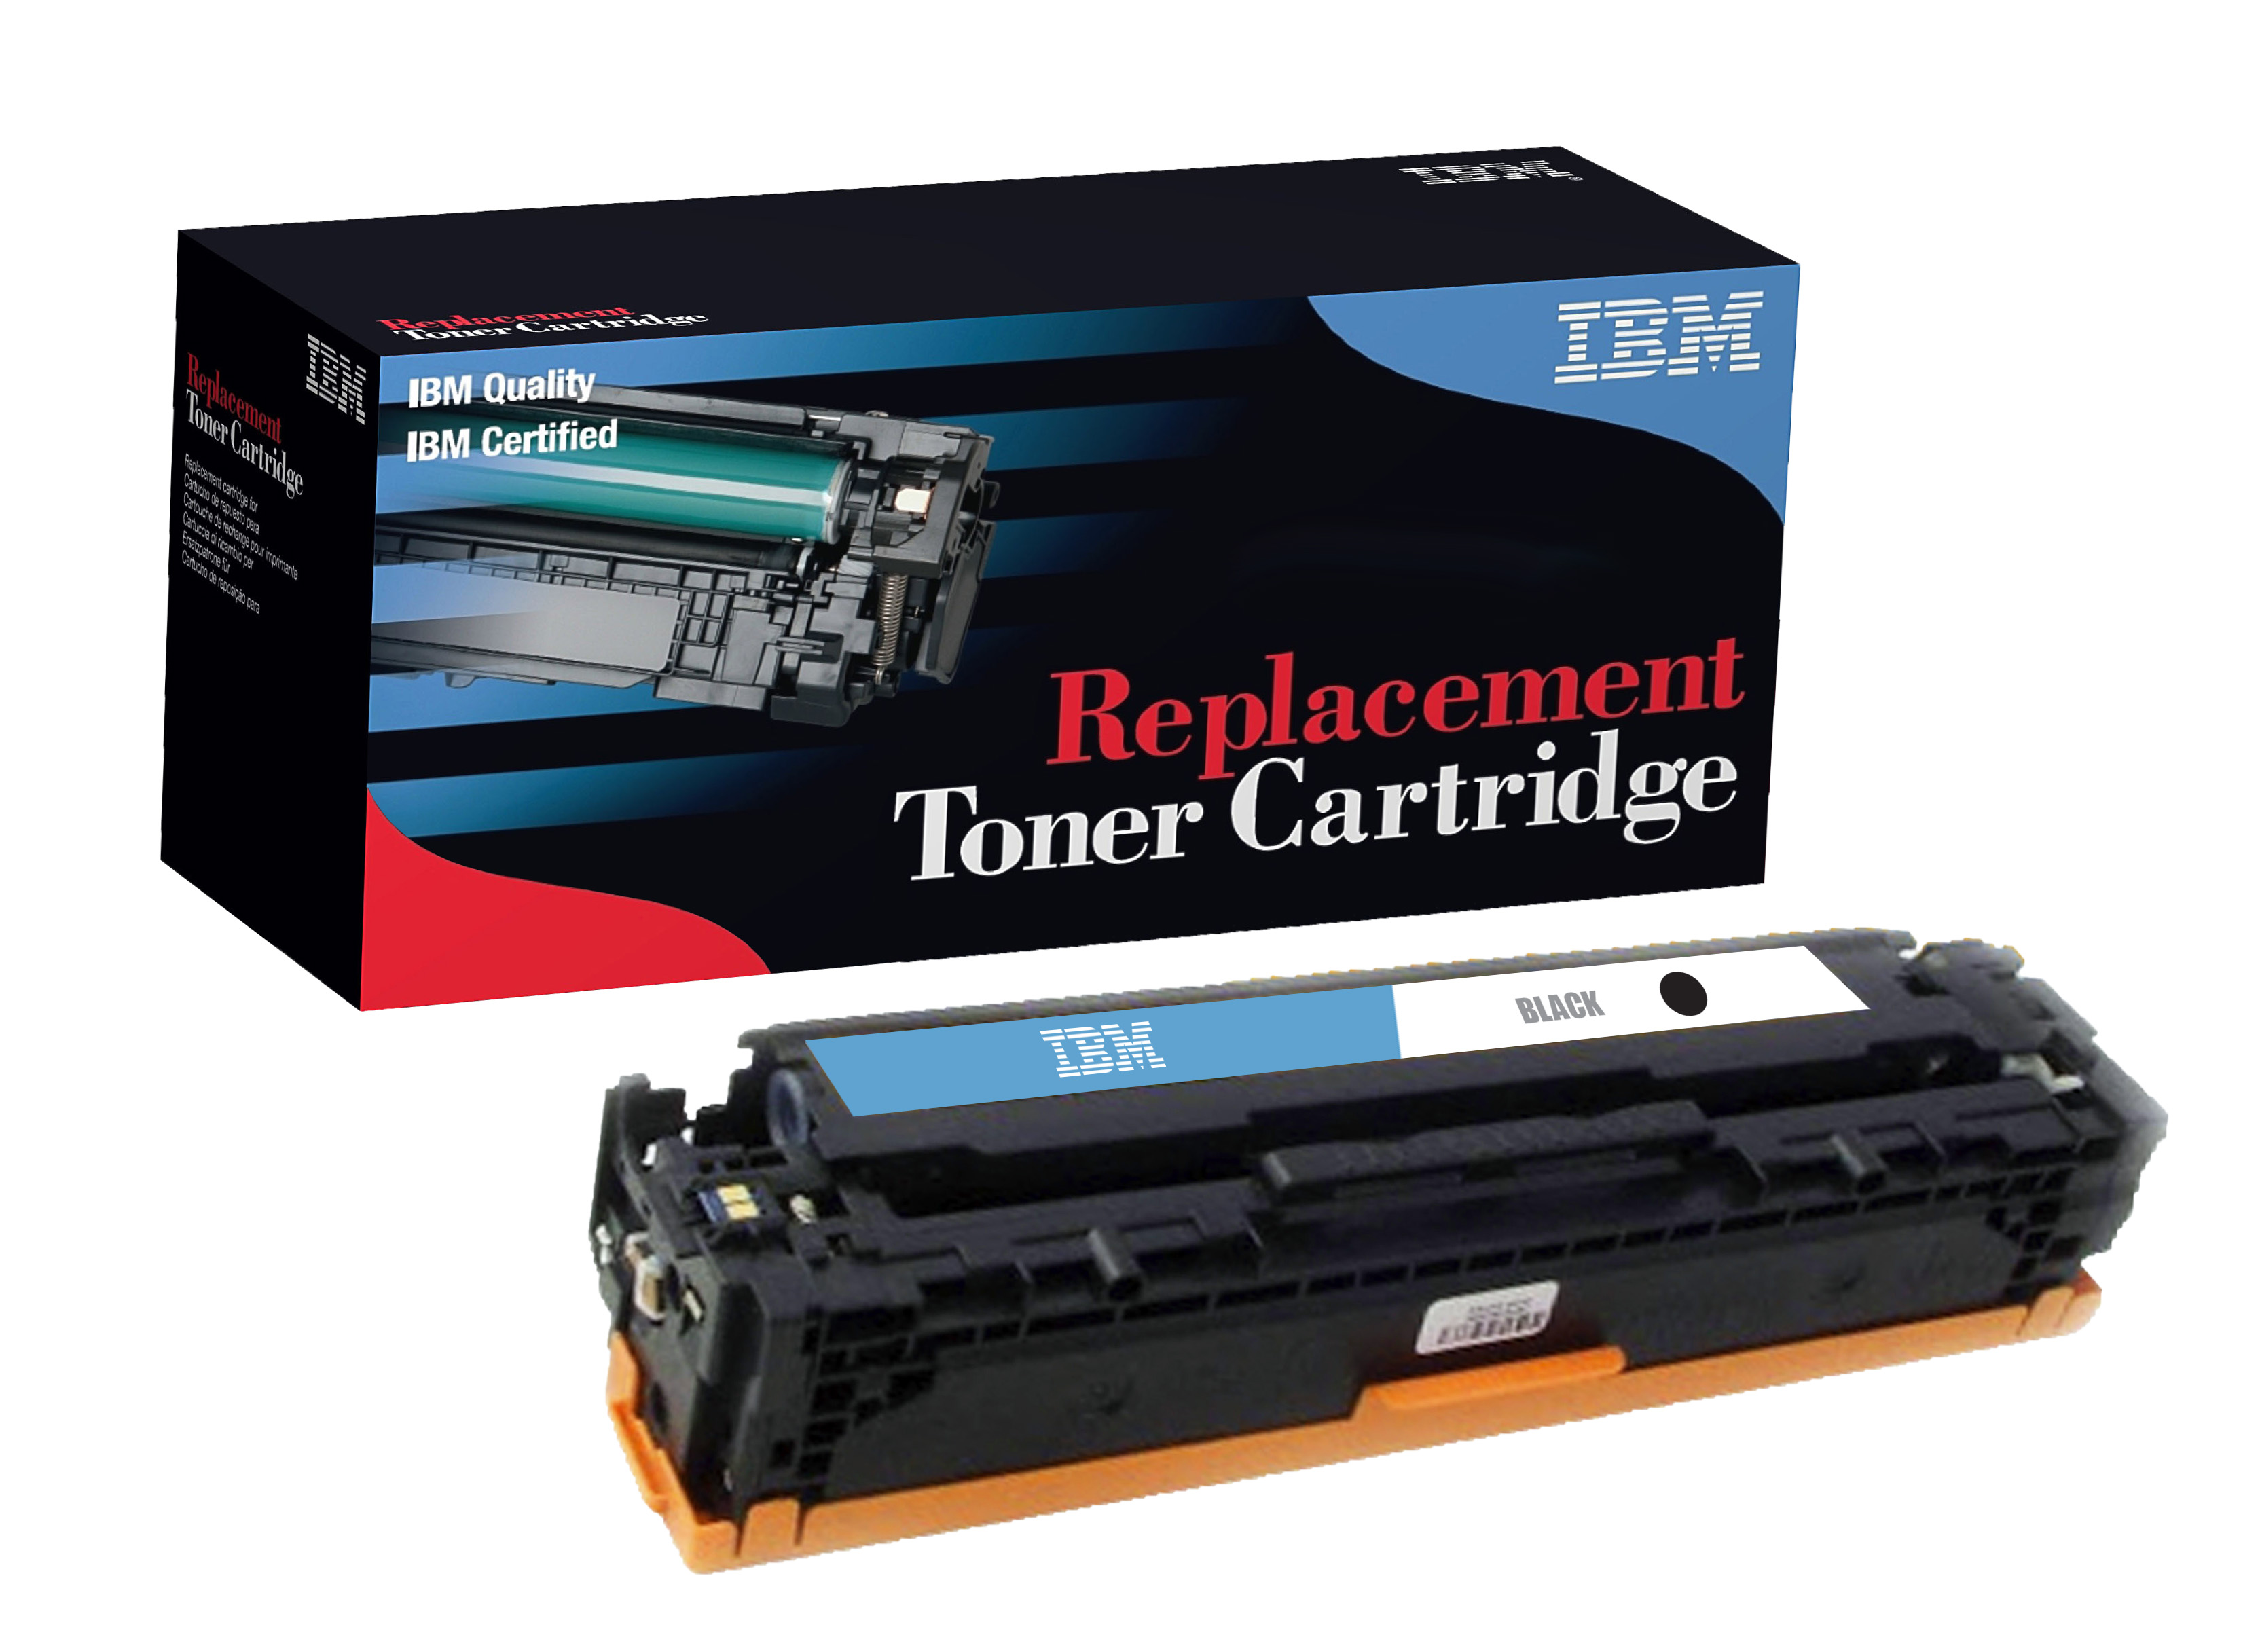 IBM Replacement Black Toner Cartridge for HP 203A Color LaserJet Pro M254dw M254nw M281fdn /